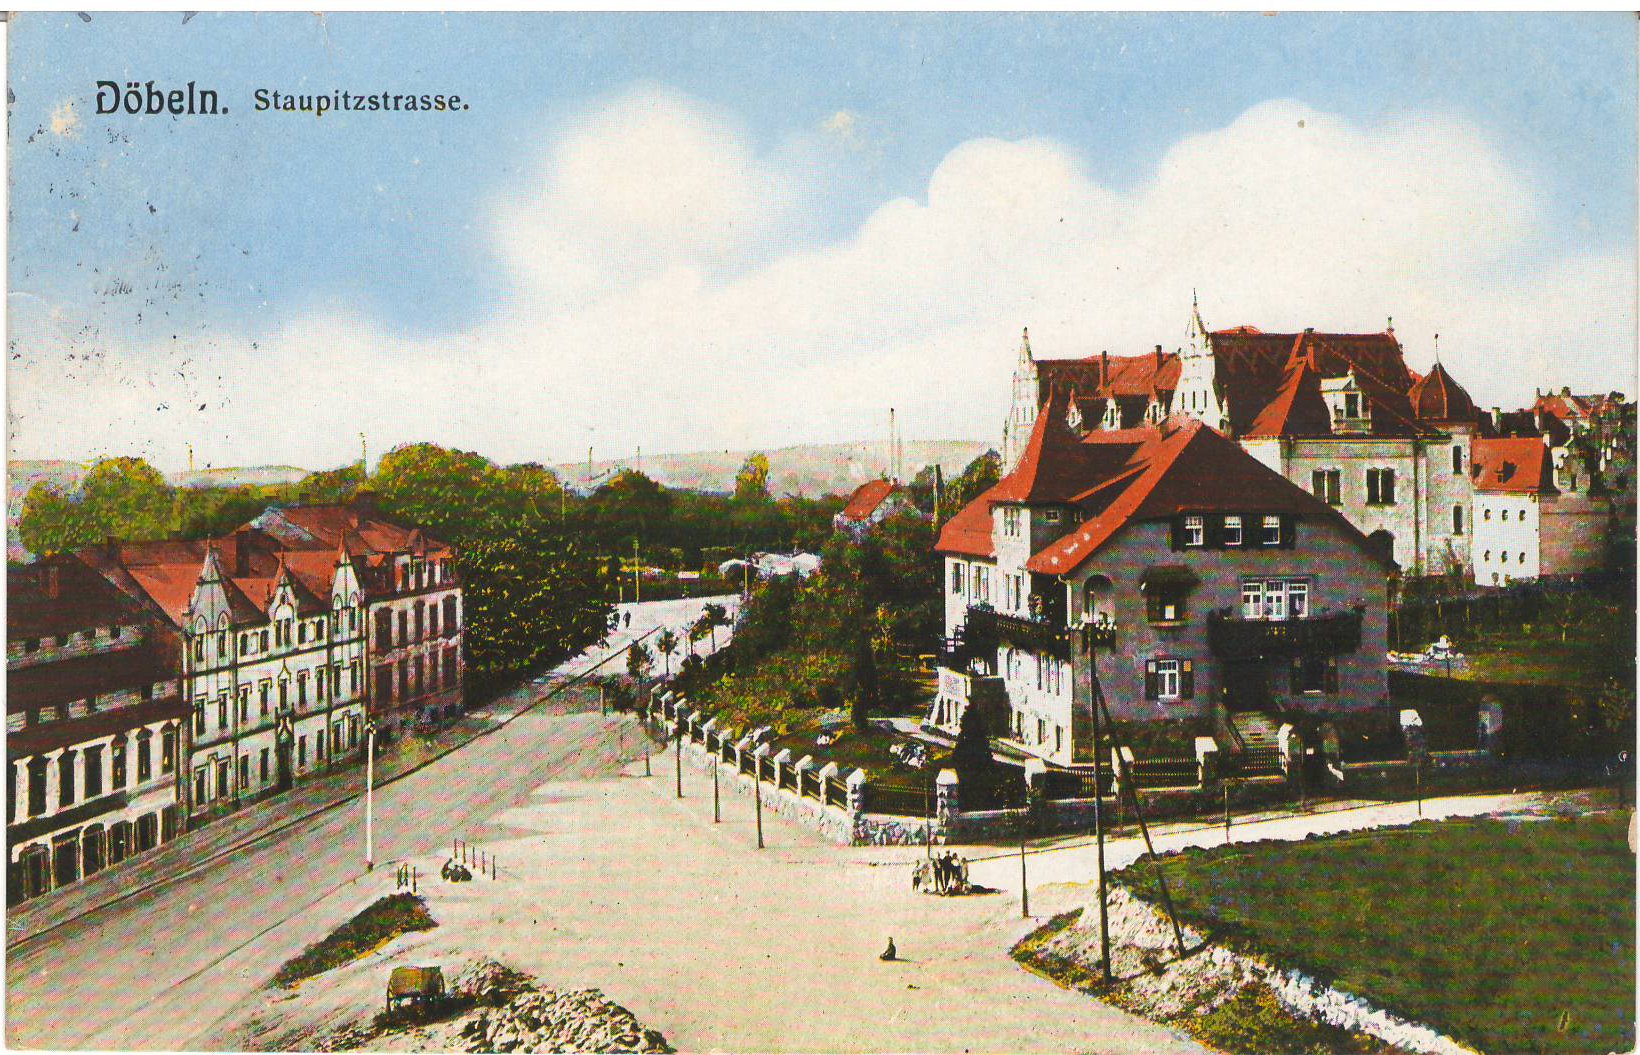 Ansichtspostkarte Döbeln: Staupitzstraße (Stadtmuseum / Kleine Galerie Döbeln CC BY-NC-SA)